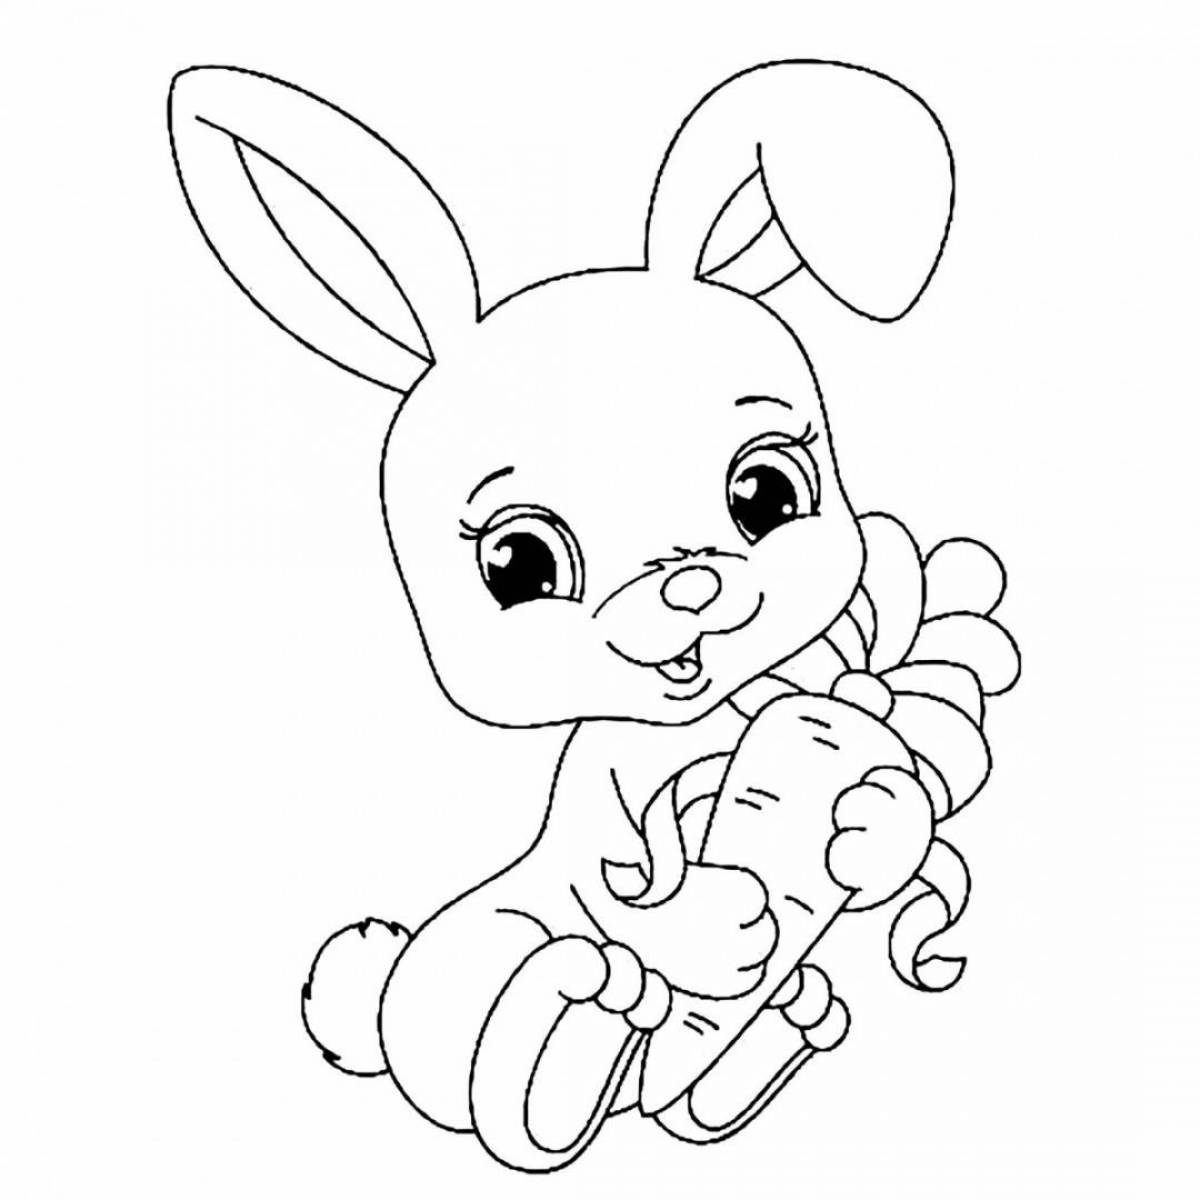 Wiggly coloring page bunny для детей